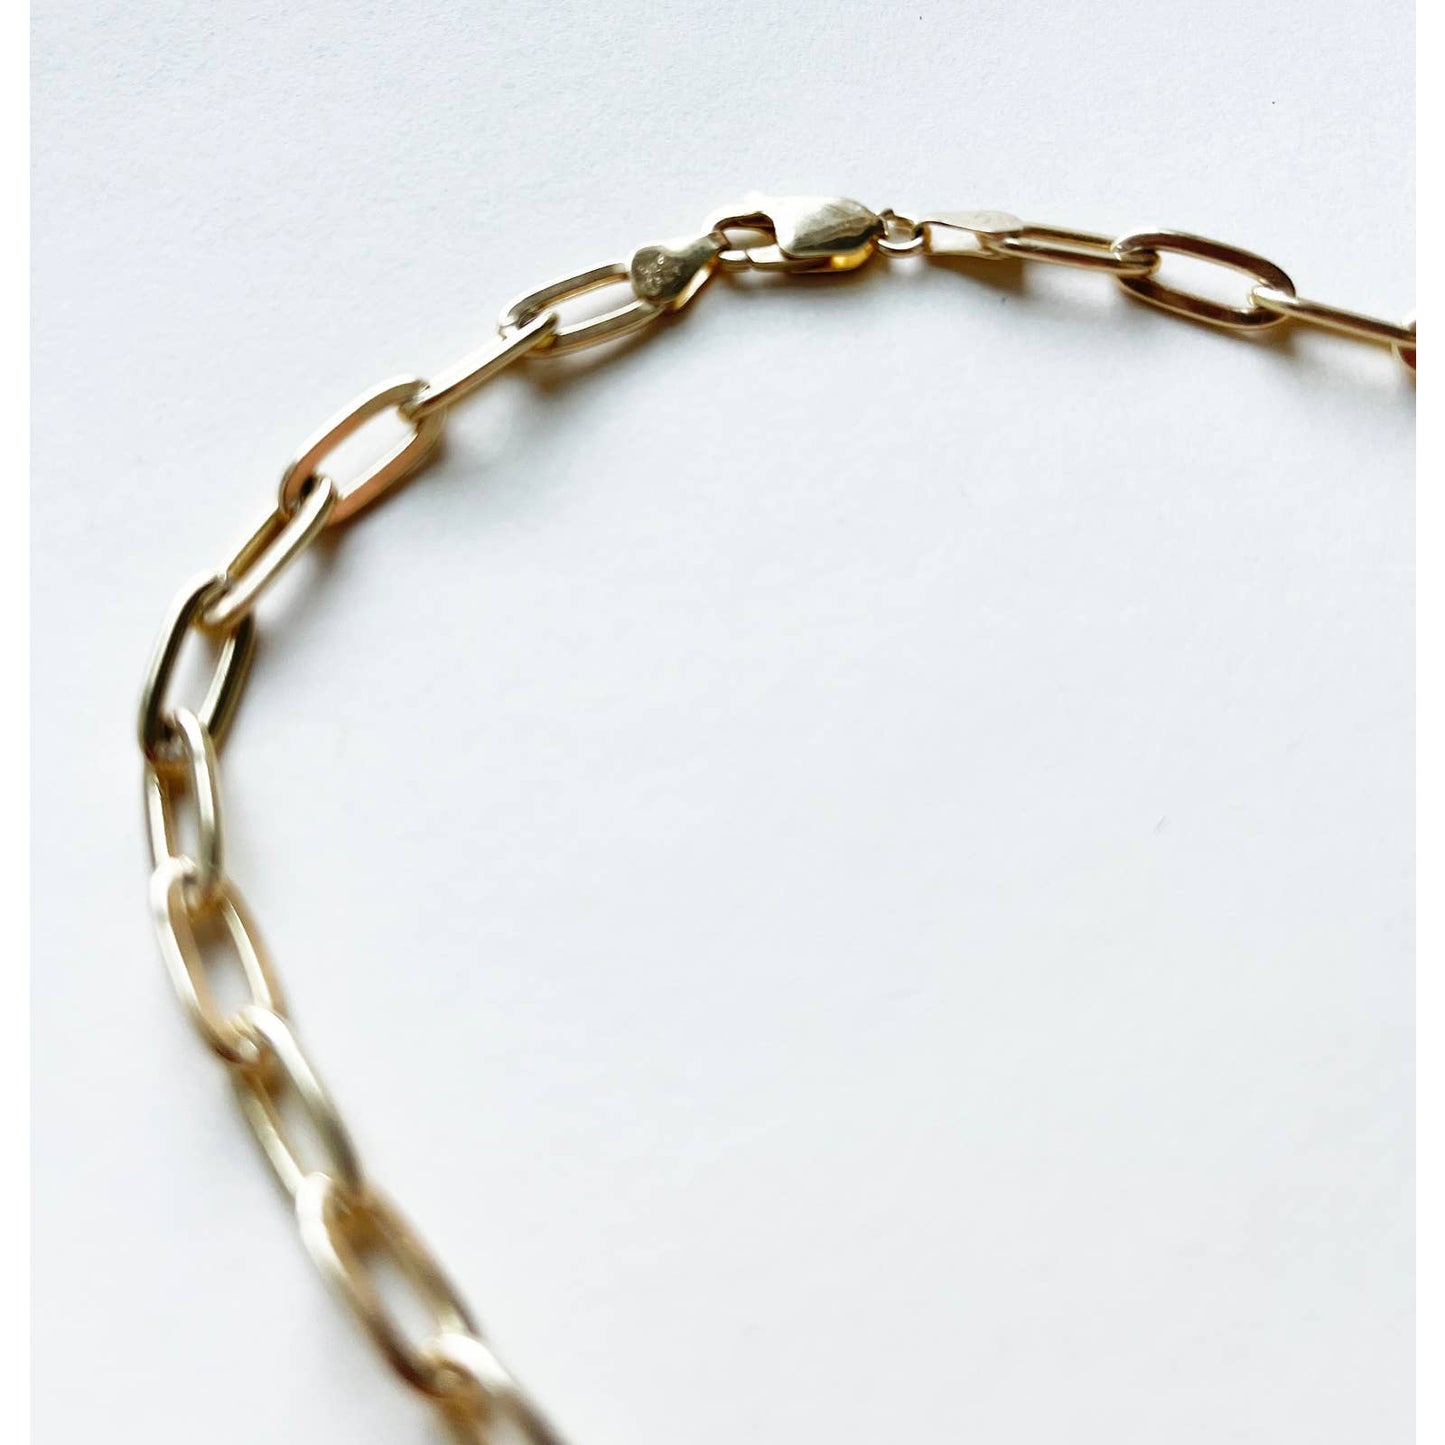 Handmade Heart Charm Necklace - Clear Quartz Crystal Stones